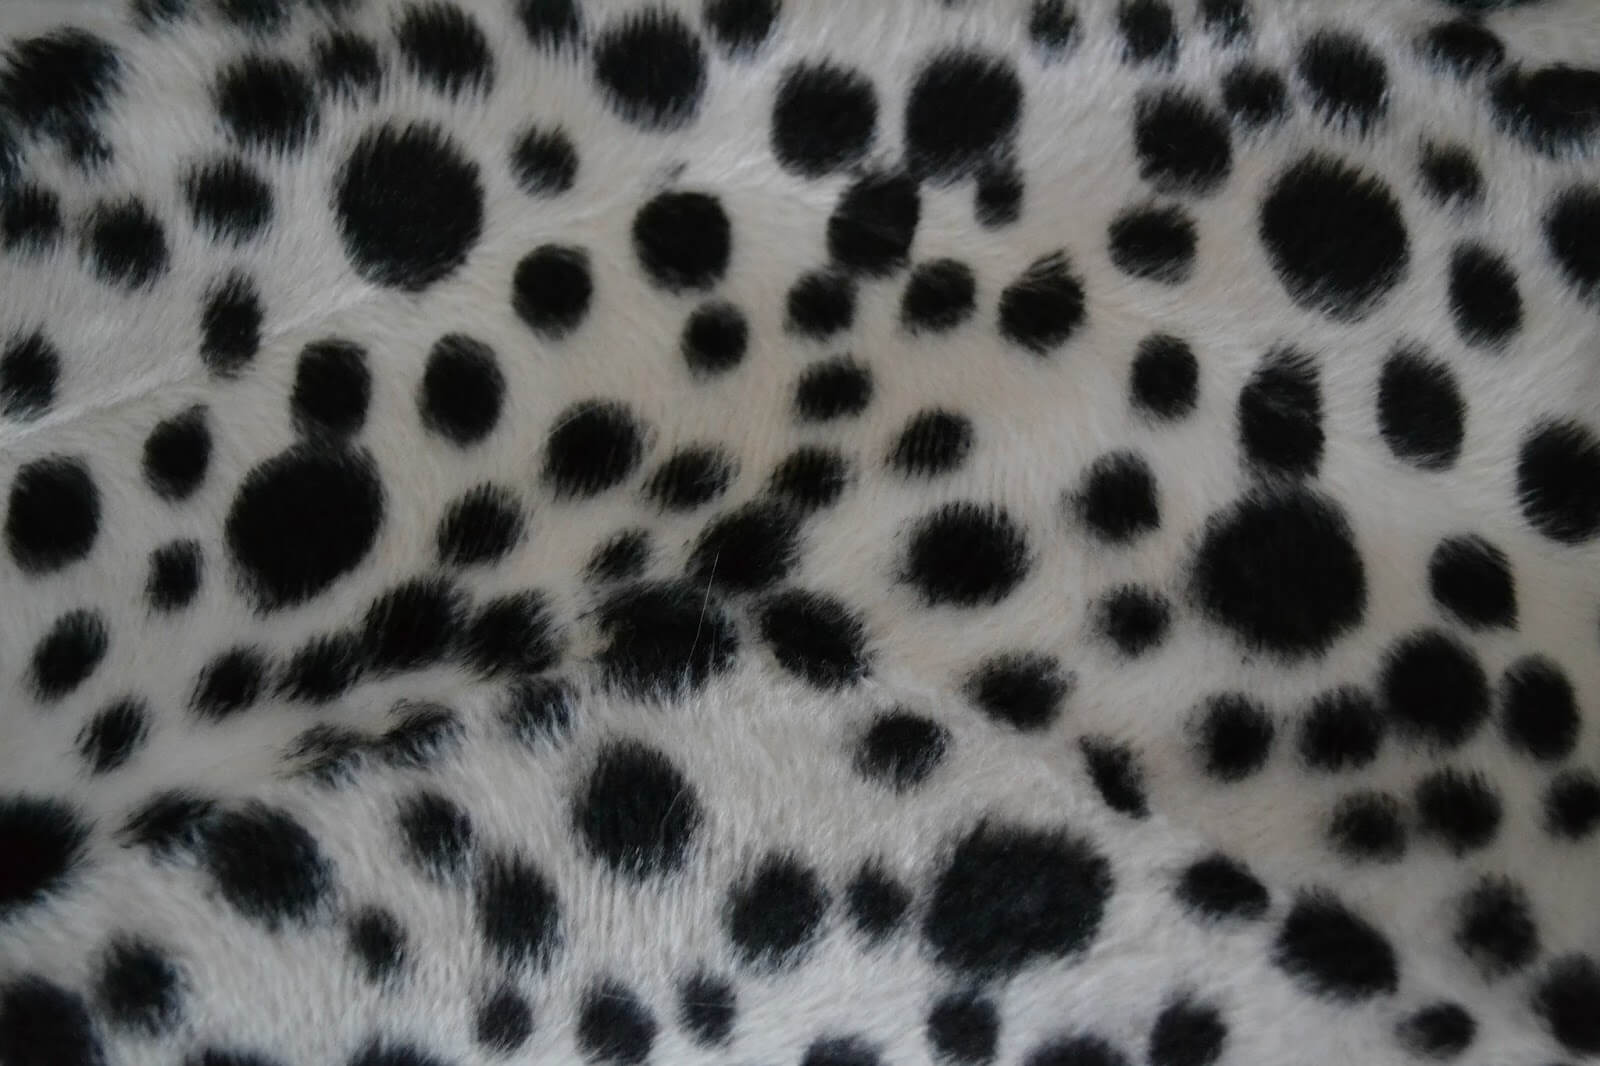 Black And White Cheetah Print Wallpaper